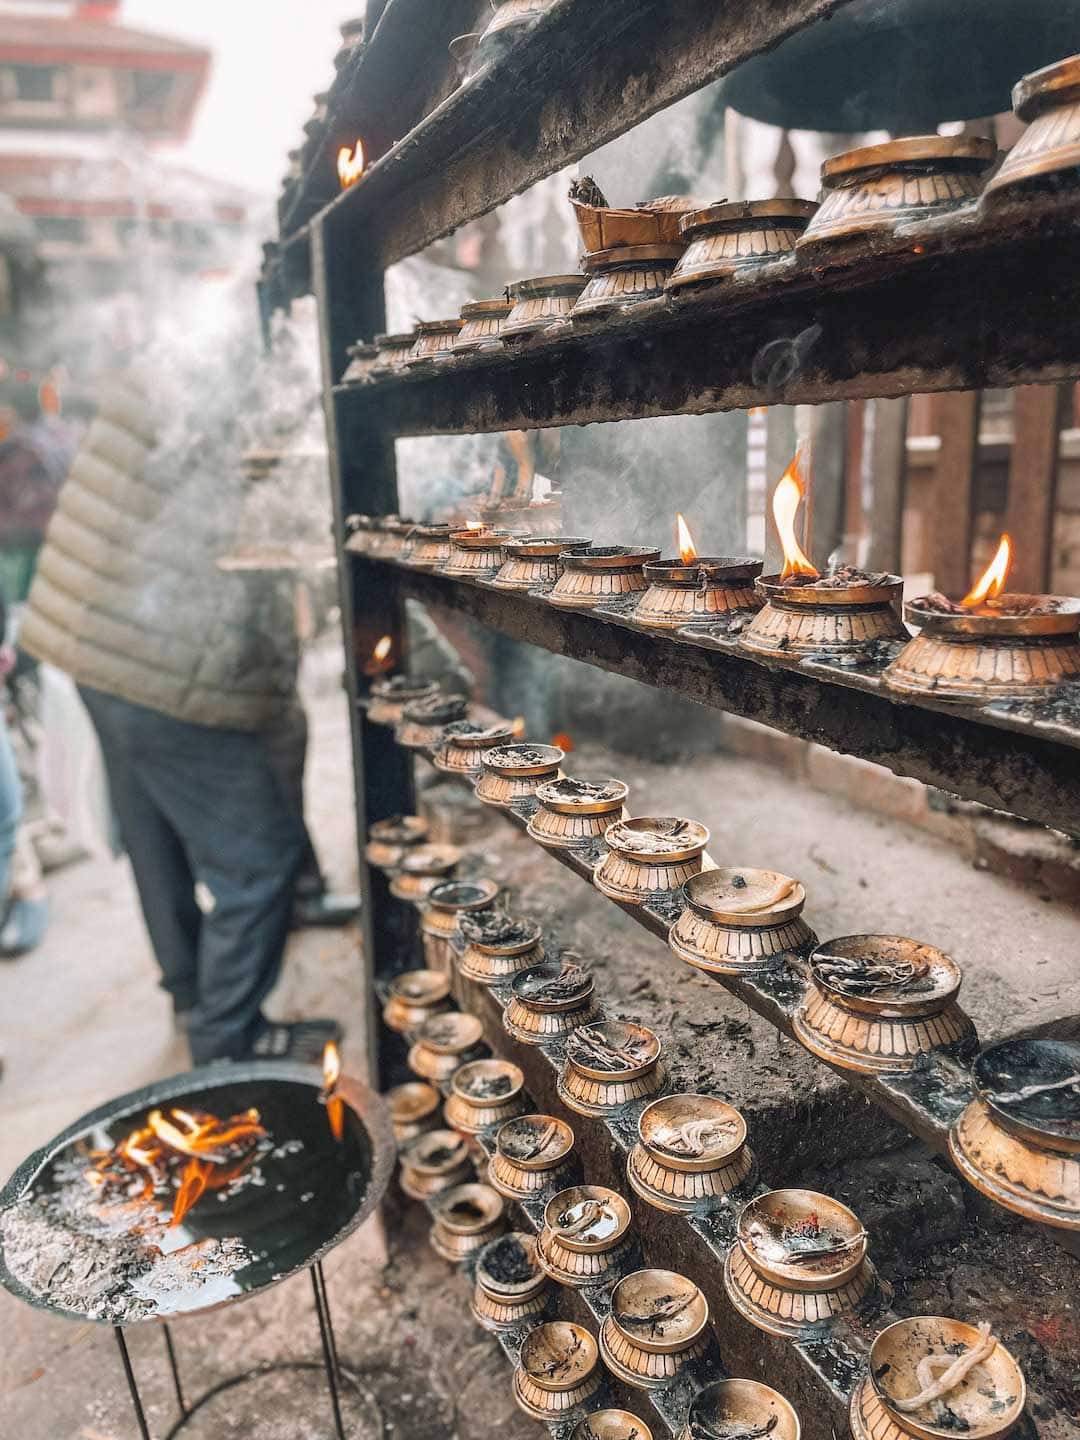 Temple rituals in Nepal